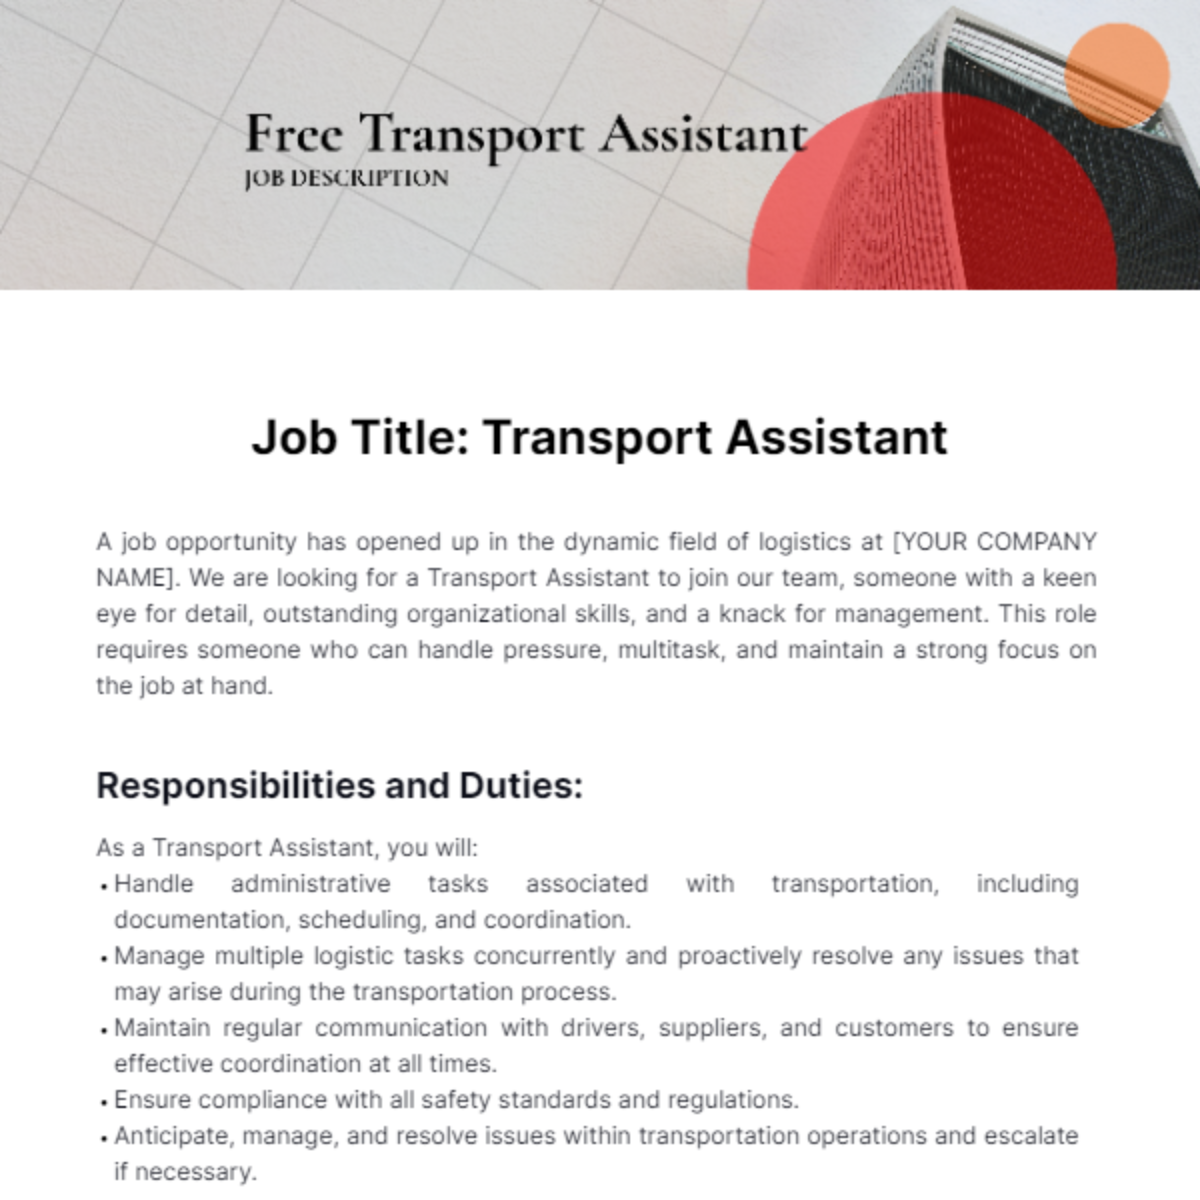 Transport Assistant Job Description Template